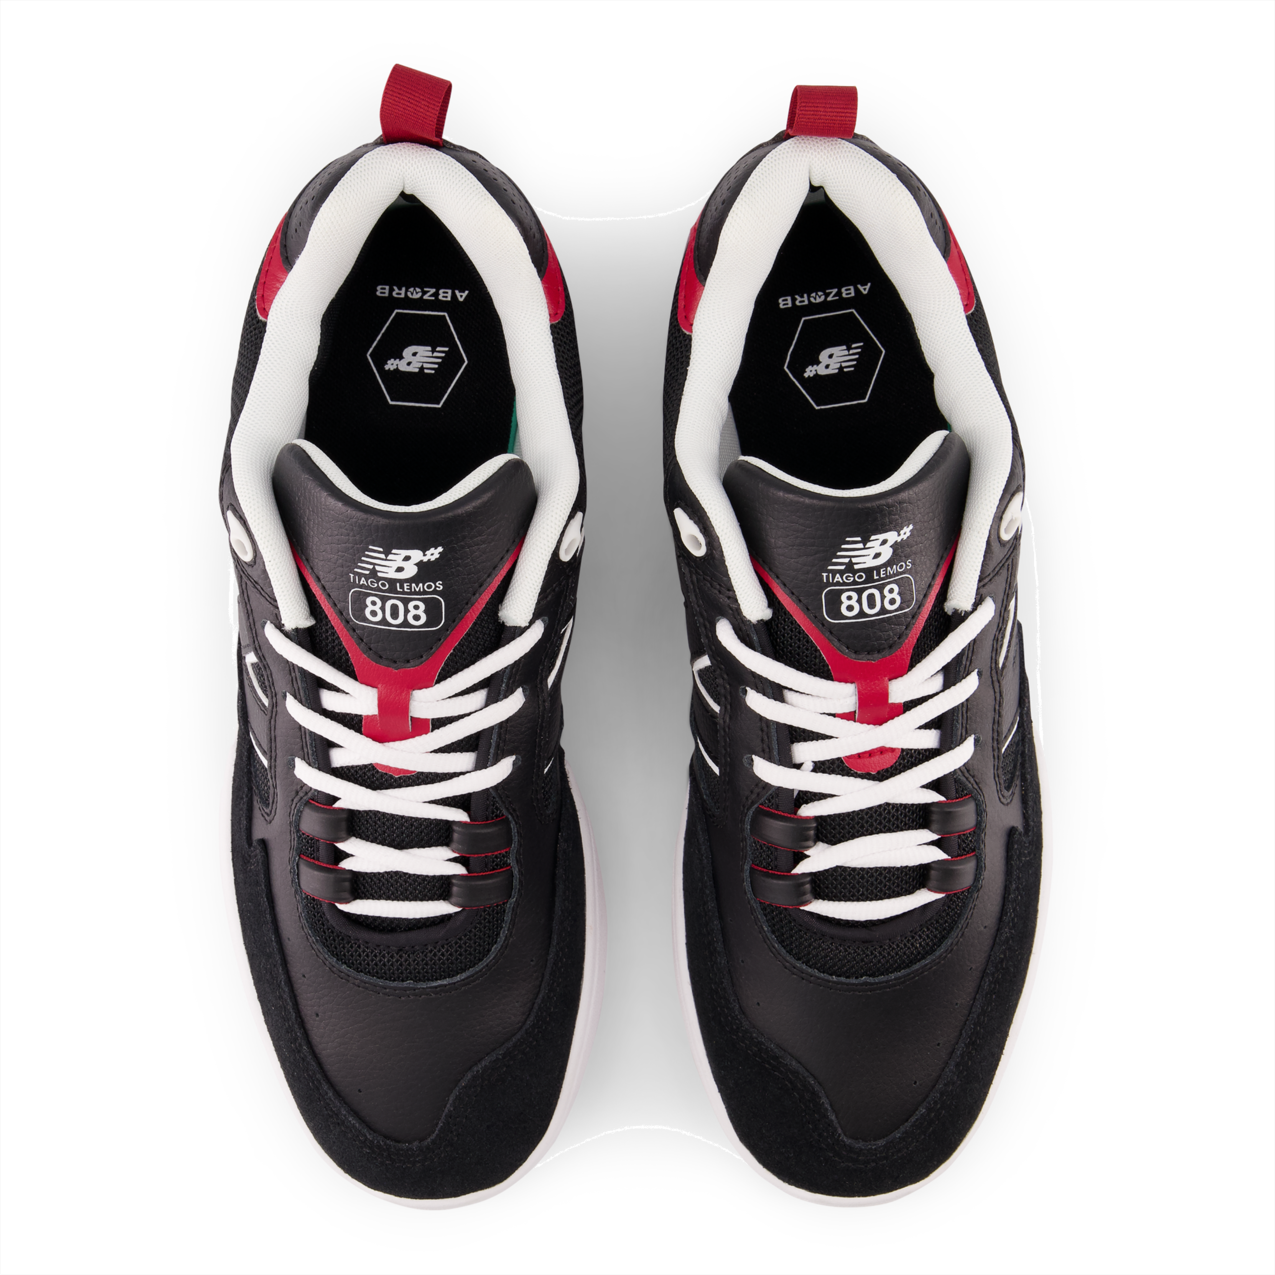 New Balance Numeric Men's Tiago Lemos 808 Black Red Shoes